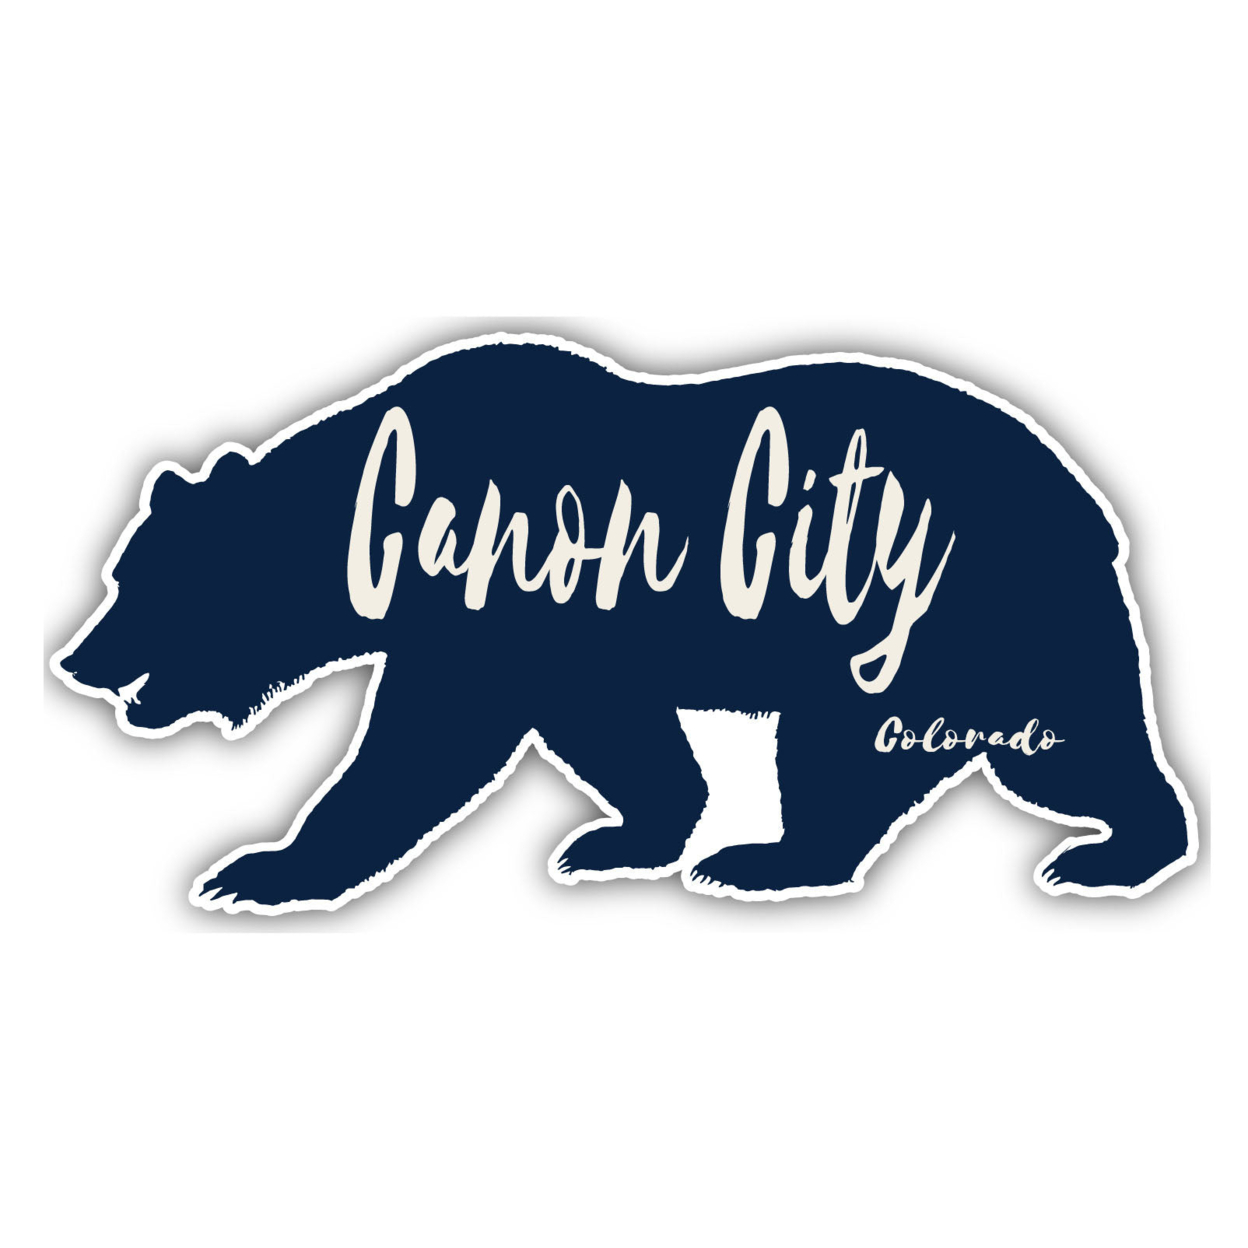 Canon City Colorado Souvenir Decorative Stickers (Choose Theme And Size) - 4-Pack, 4-Inch, Bear